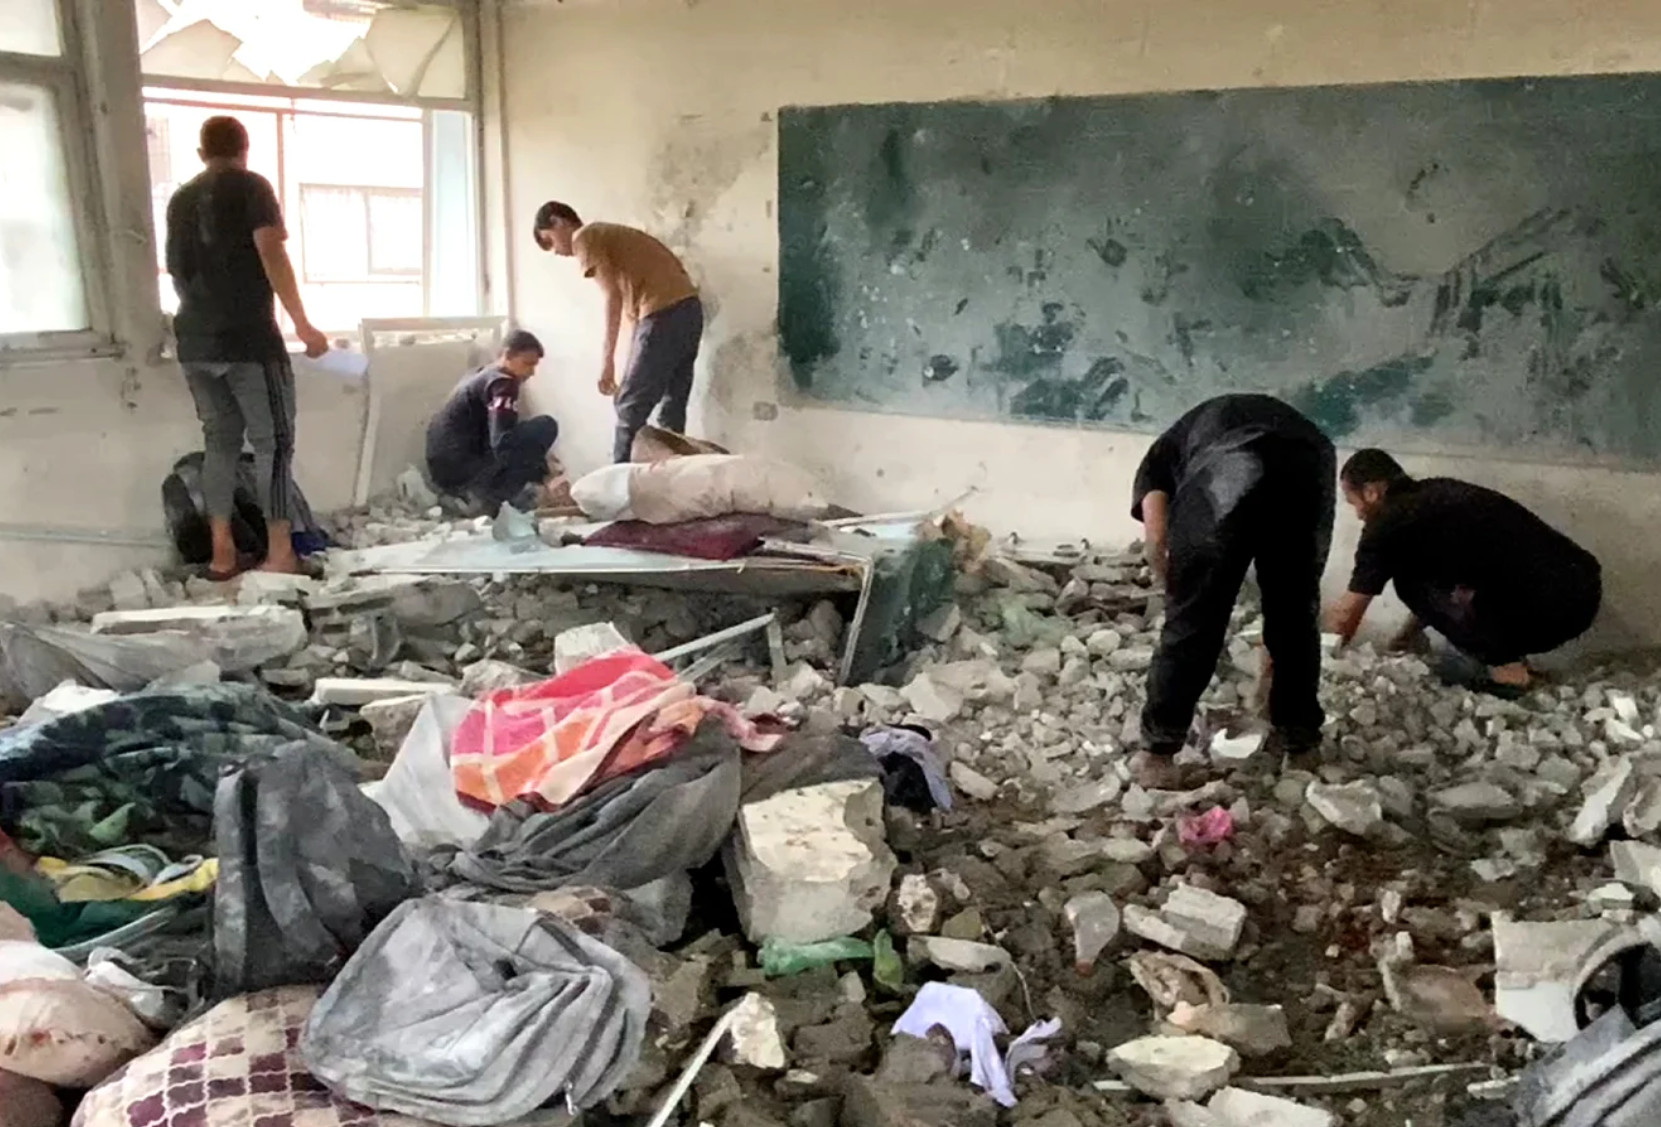 Israel strike on UN school that left dozens dead used US munitions, CNN analysis finds